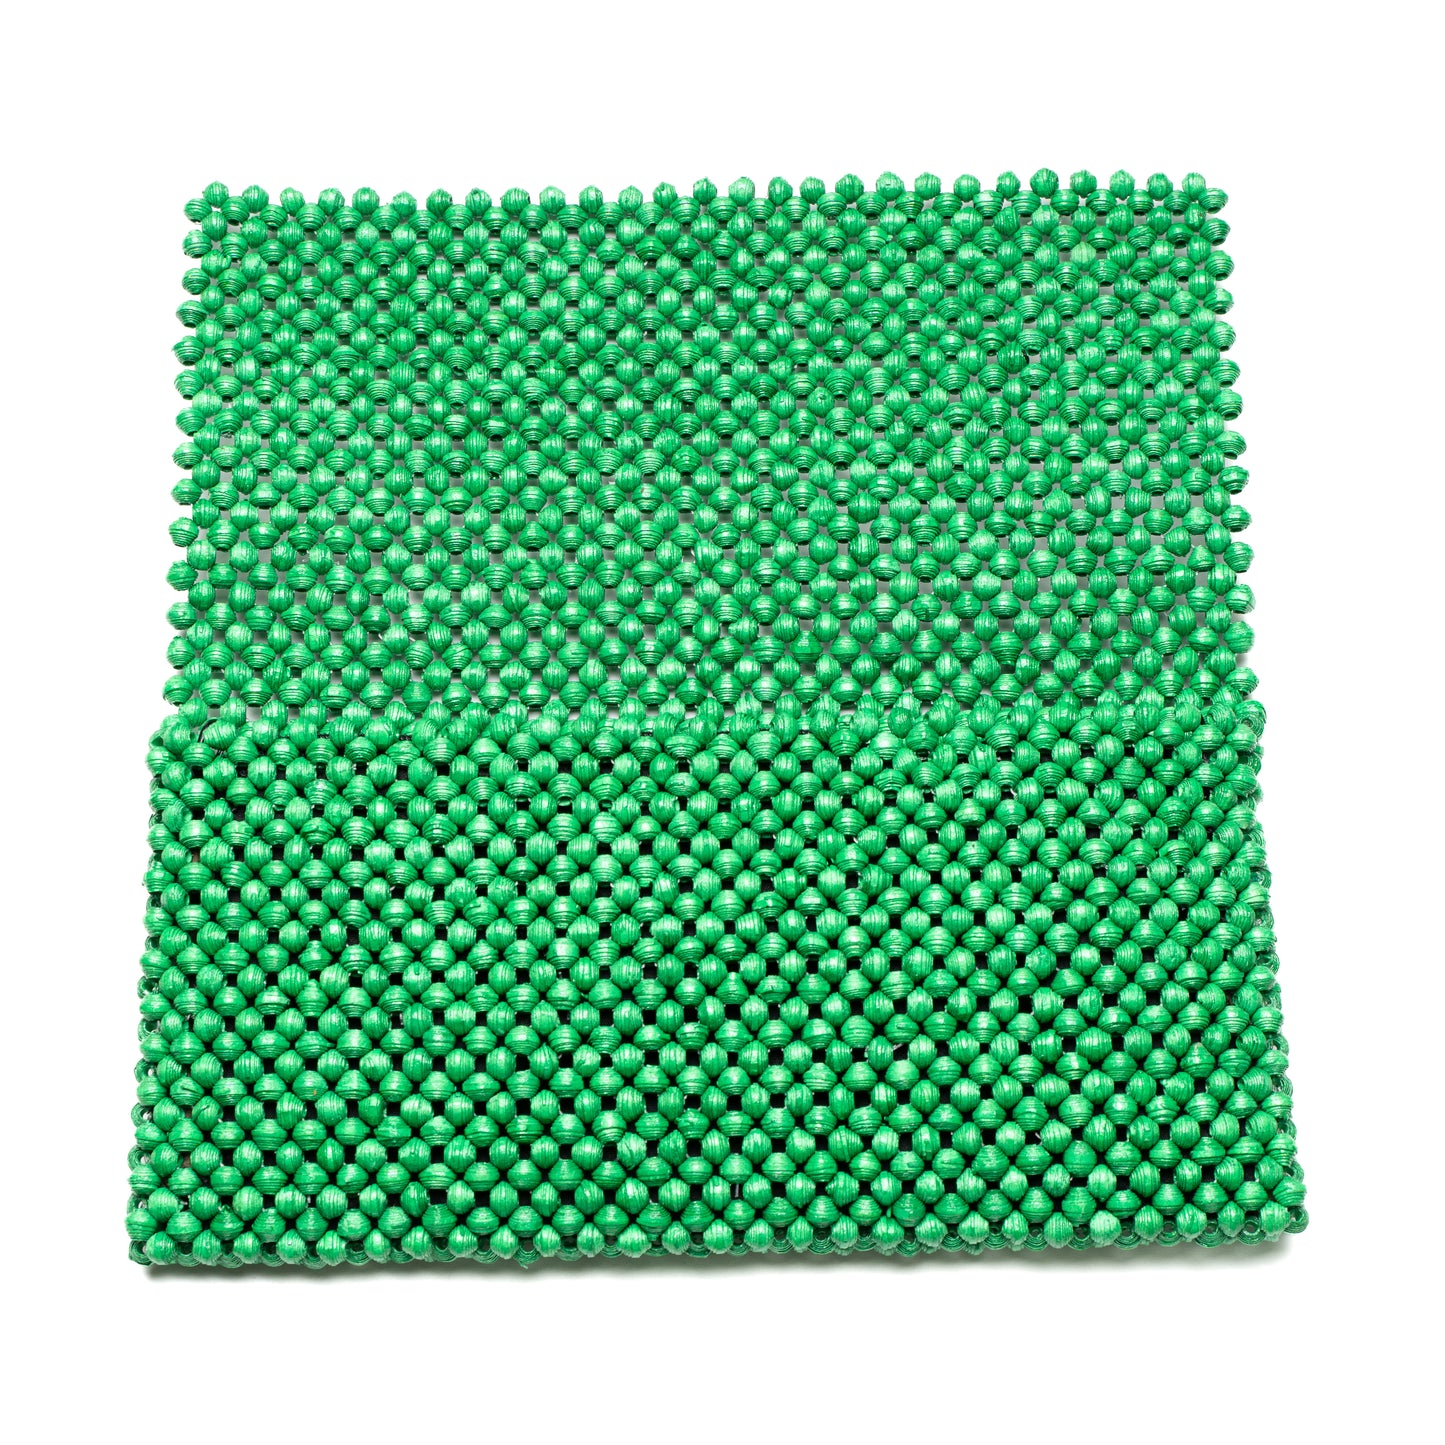 Paper bead clutch - Green